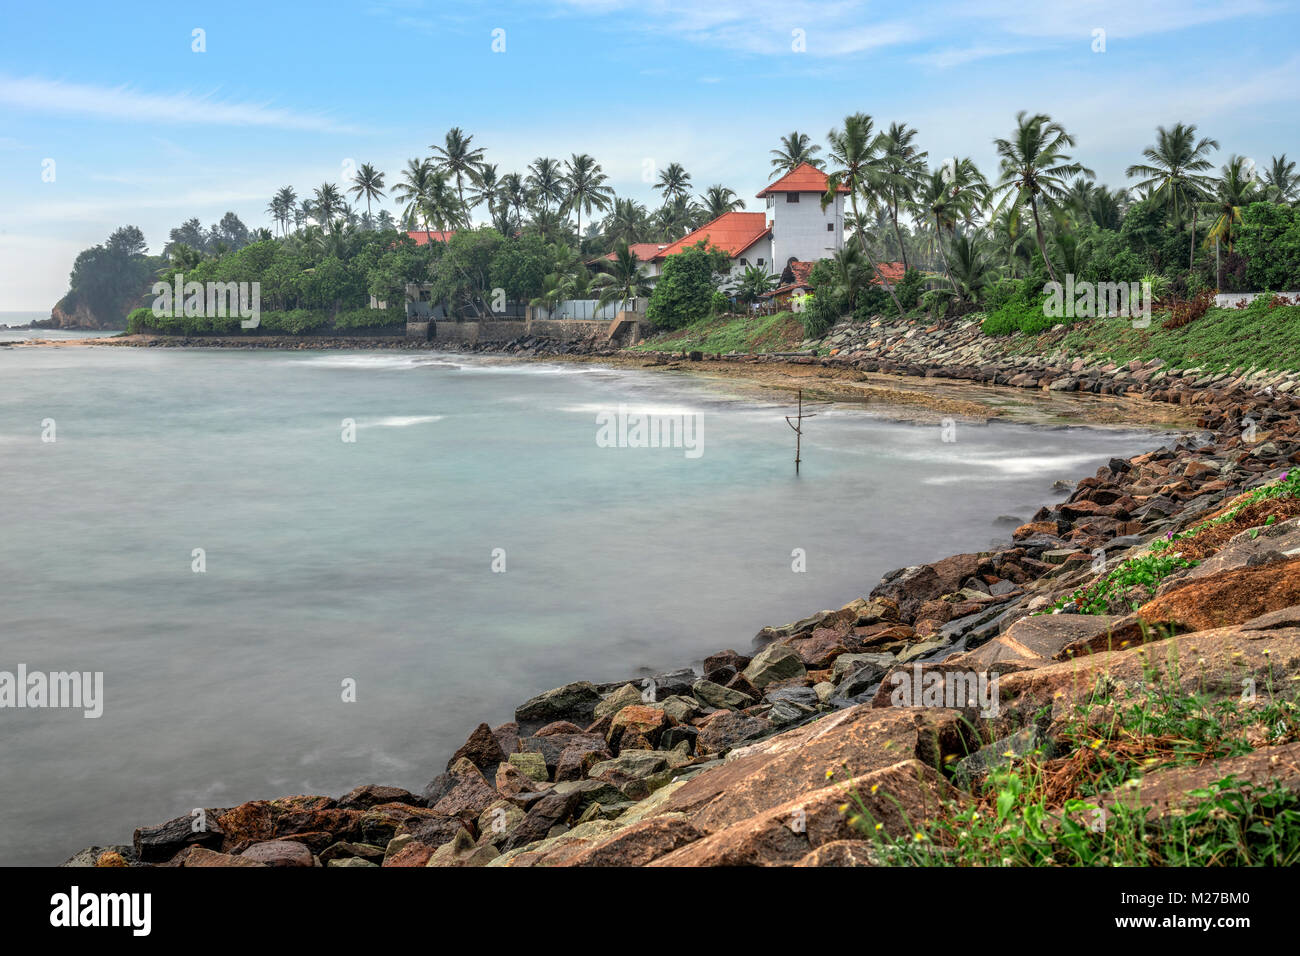 La plage de mirissa, Mirissa, Sri Lanka, Asie Banque D'Images